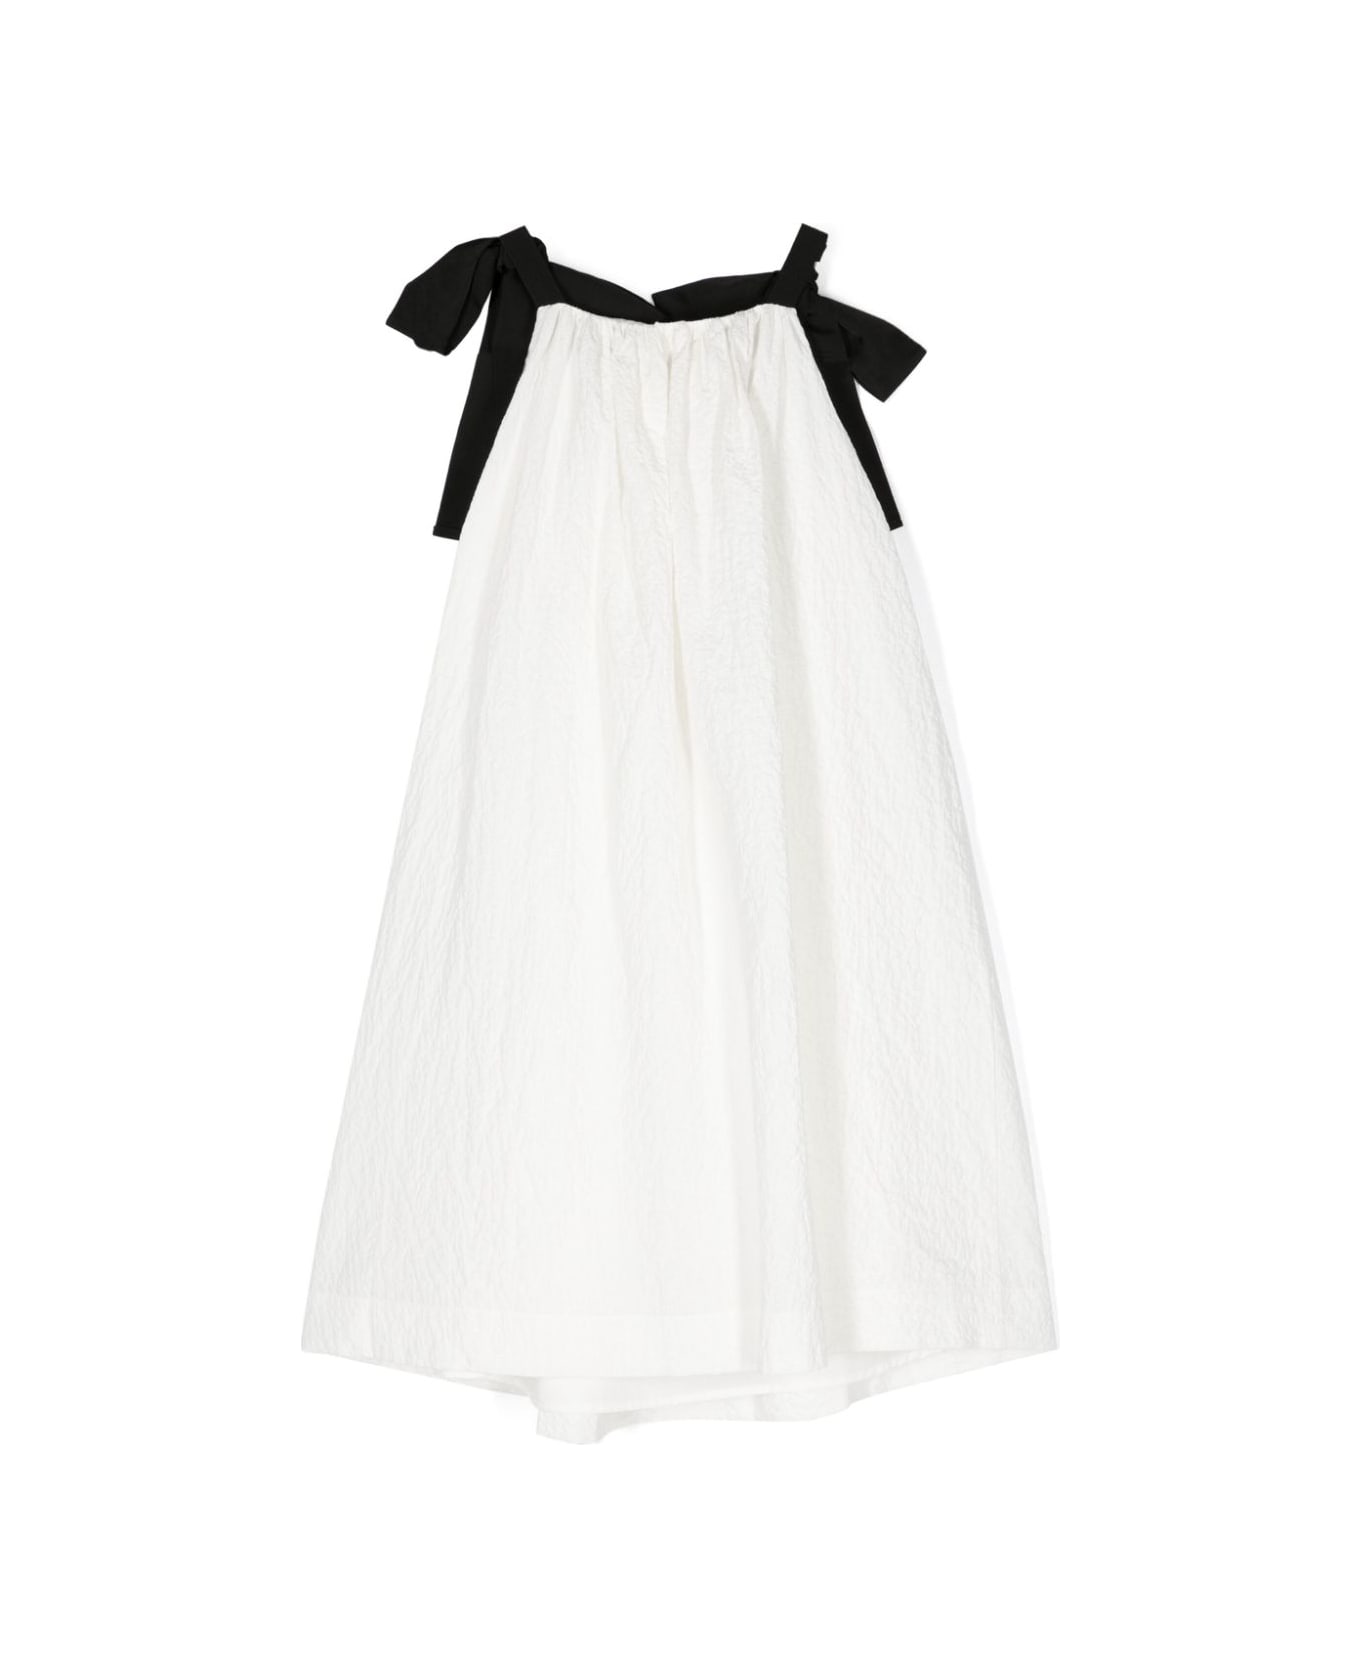 Douuod Long Sleeveless Dress - White